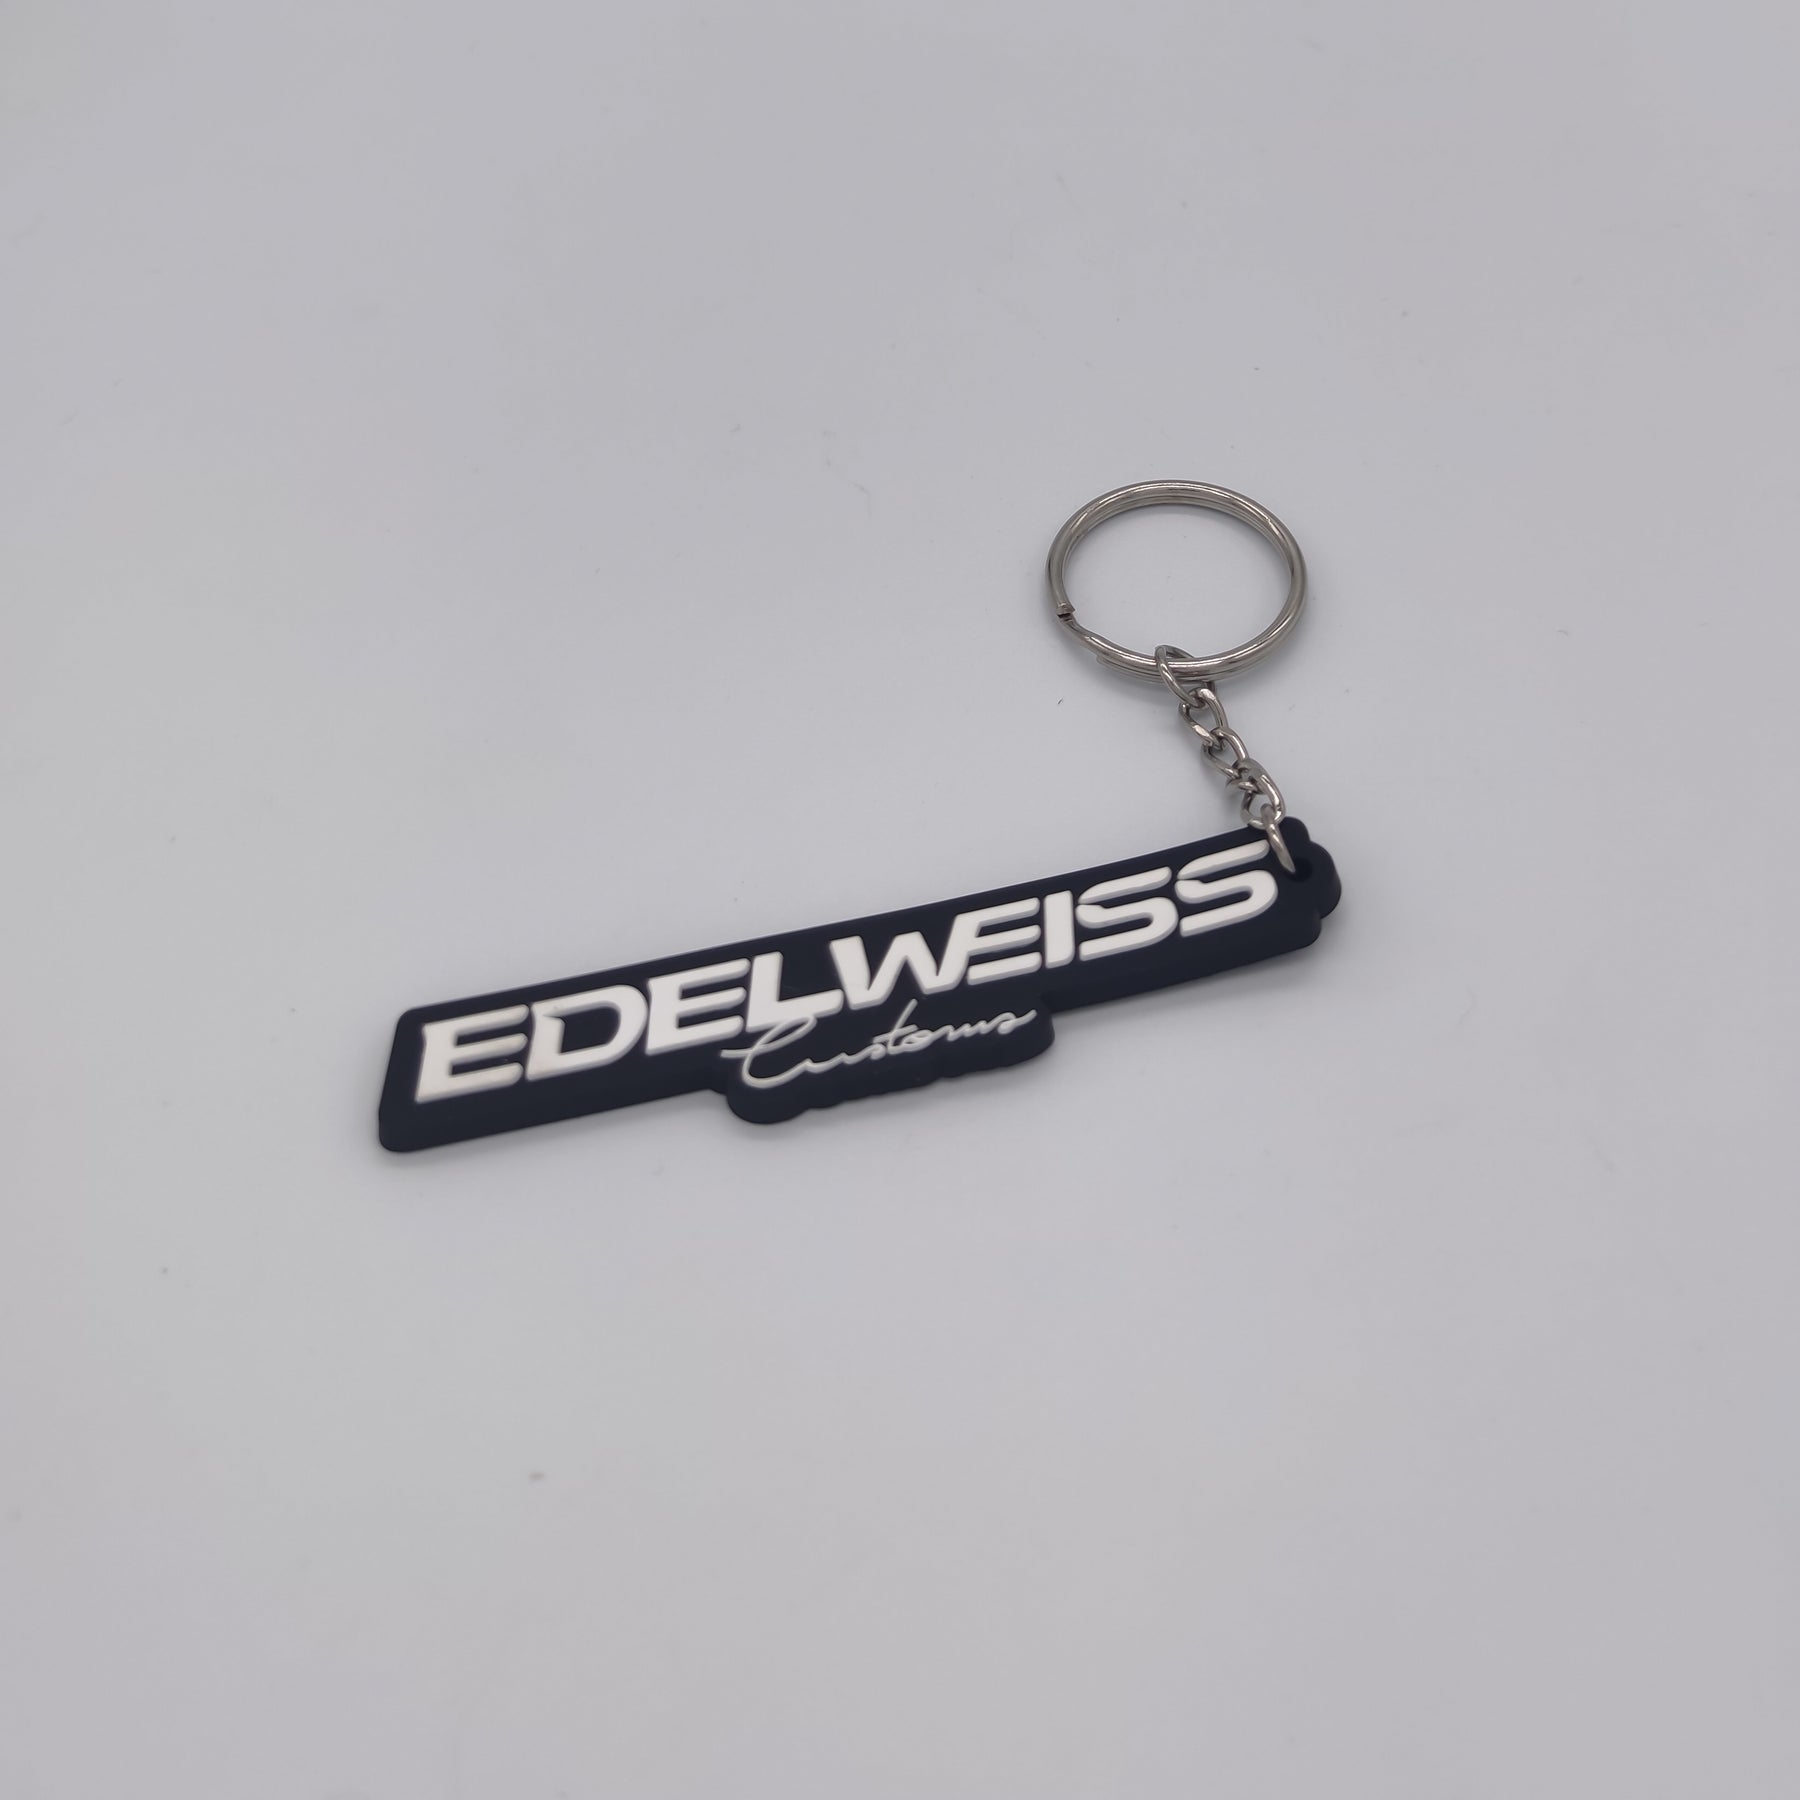 Keychain "Edelweiss"